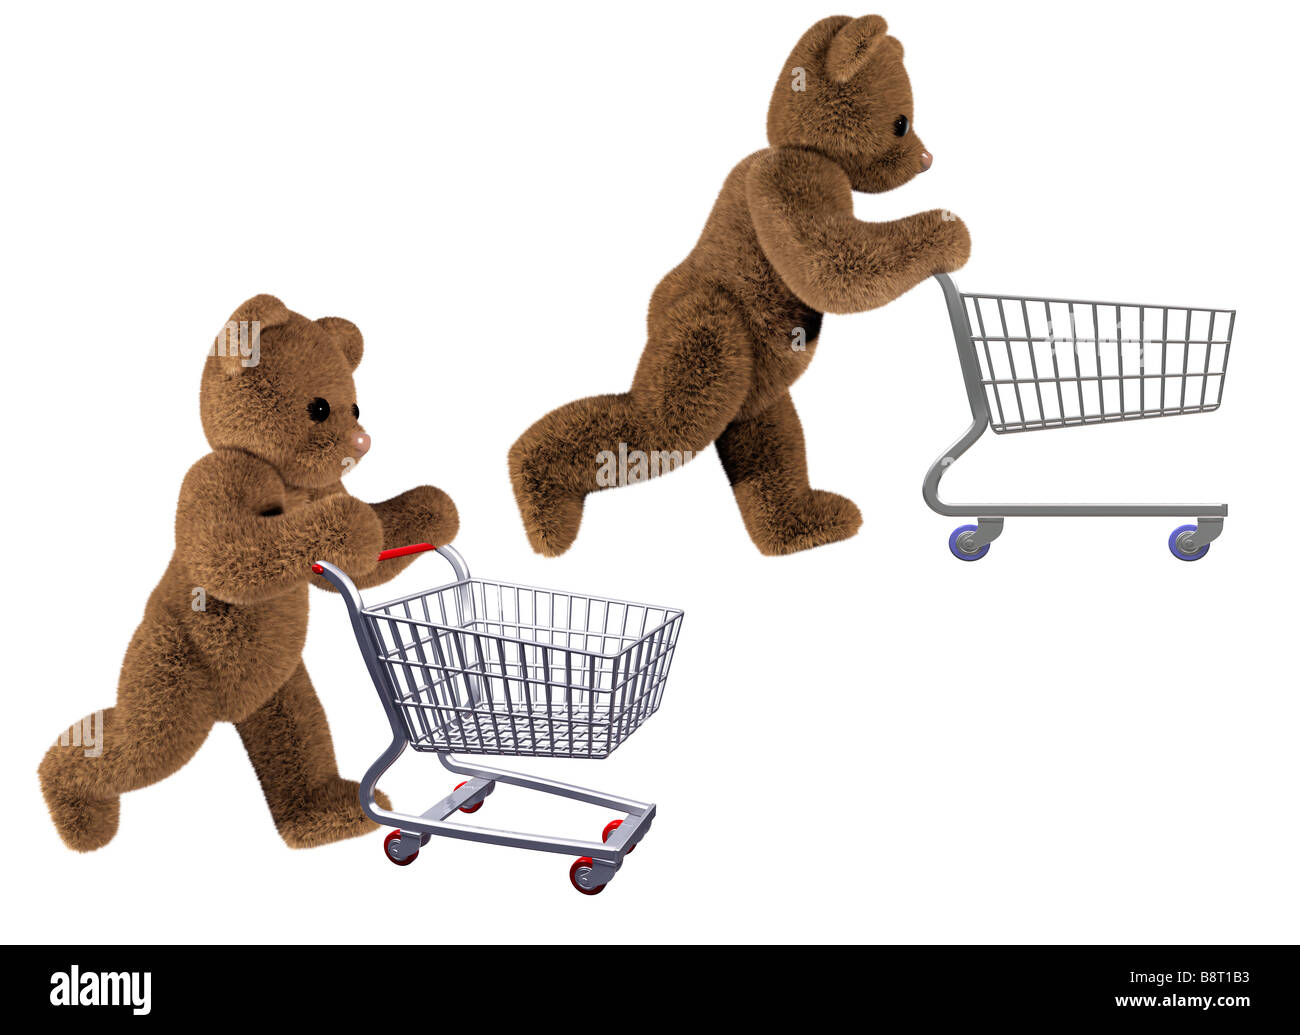 Isolated illustration of teddy bears pushing shopping carts Stock Photo